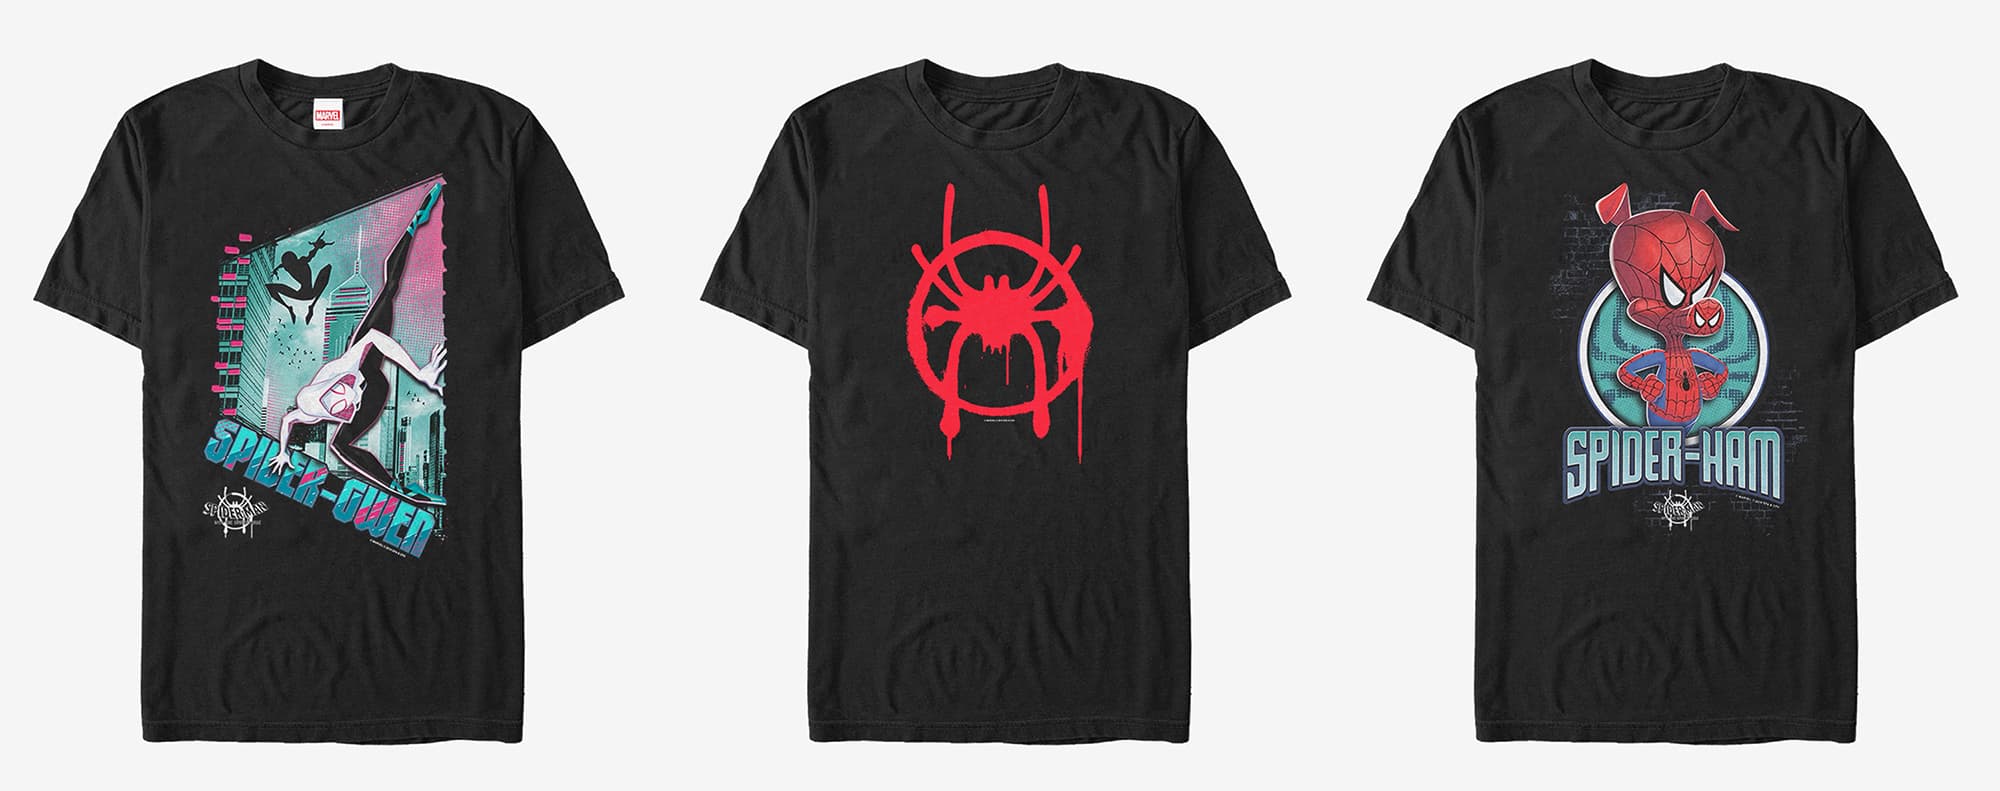 "Spider-Man: Into the Spider-Verse" t-shirts